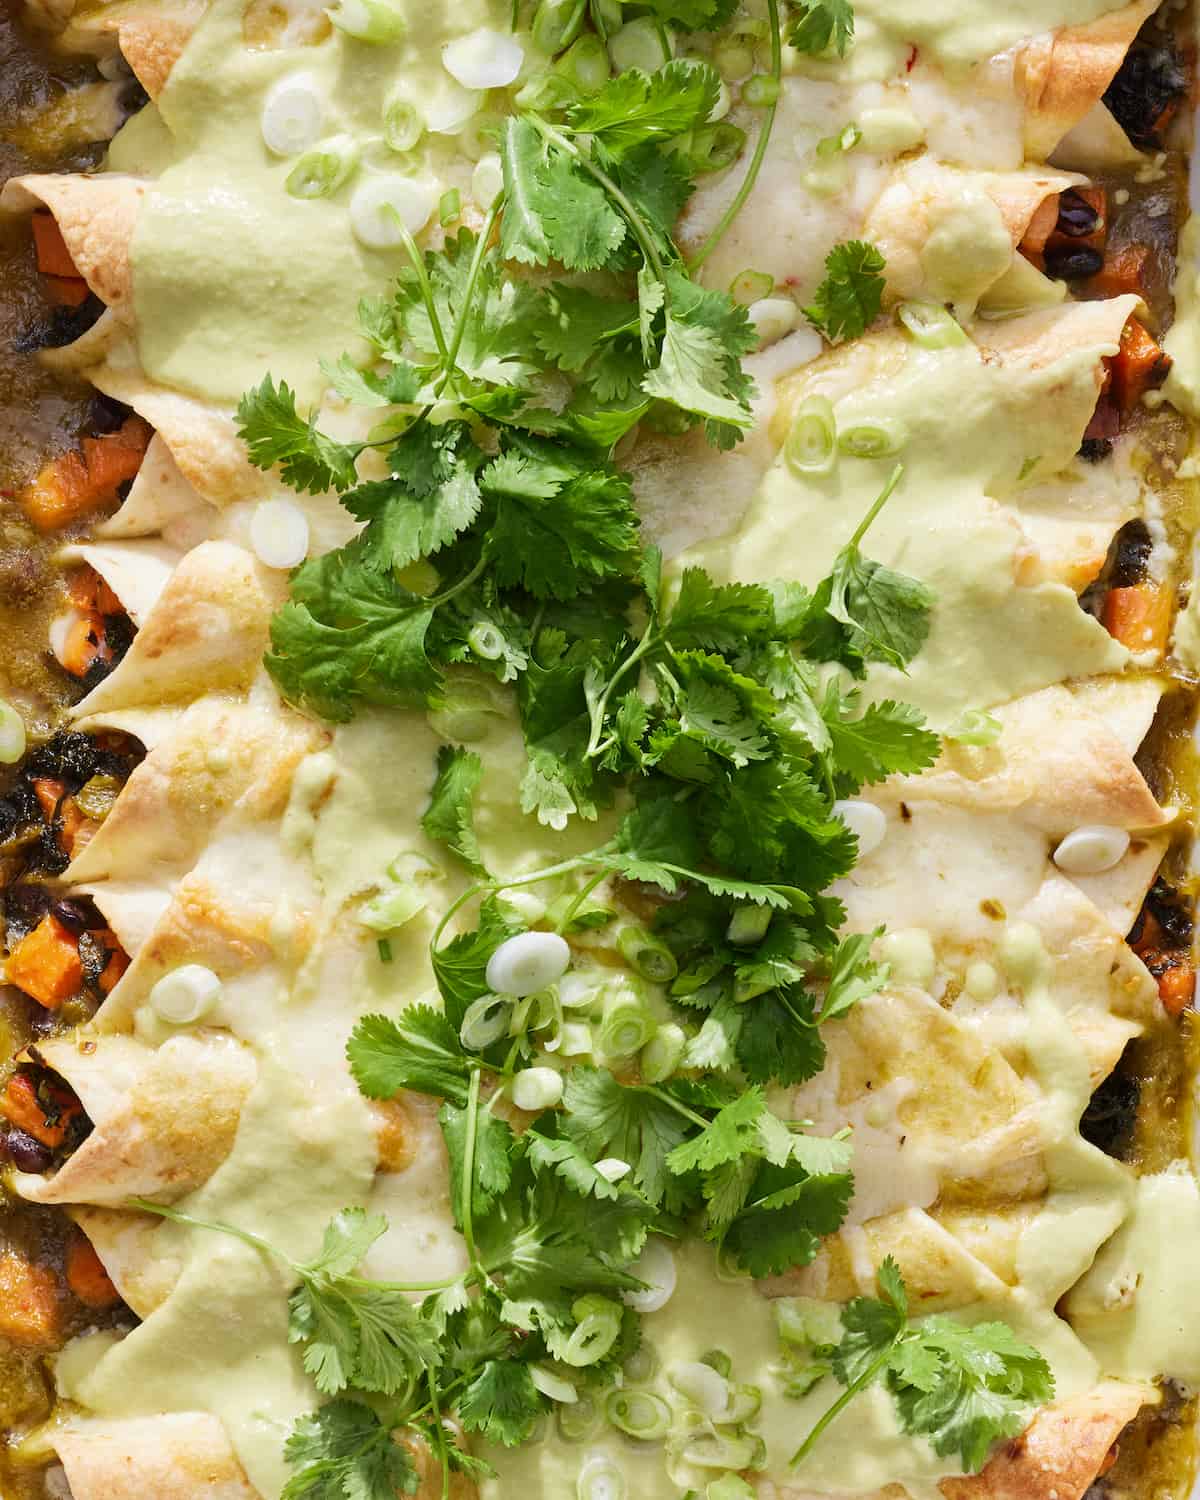 Vegetarian Enchiladas with Sweet Potato Kale and Black Beans from www.whatsgabycooking.com (@whatsgabycookin)